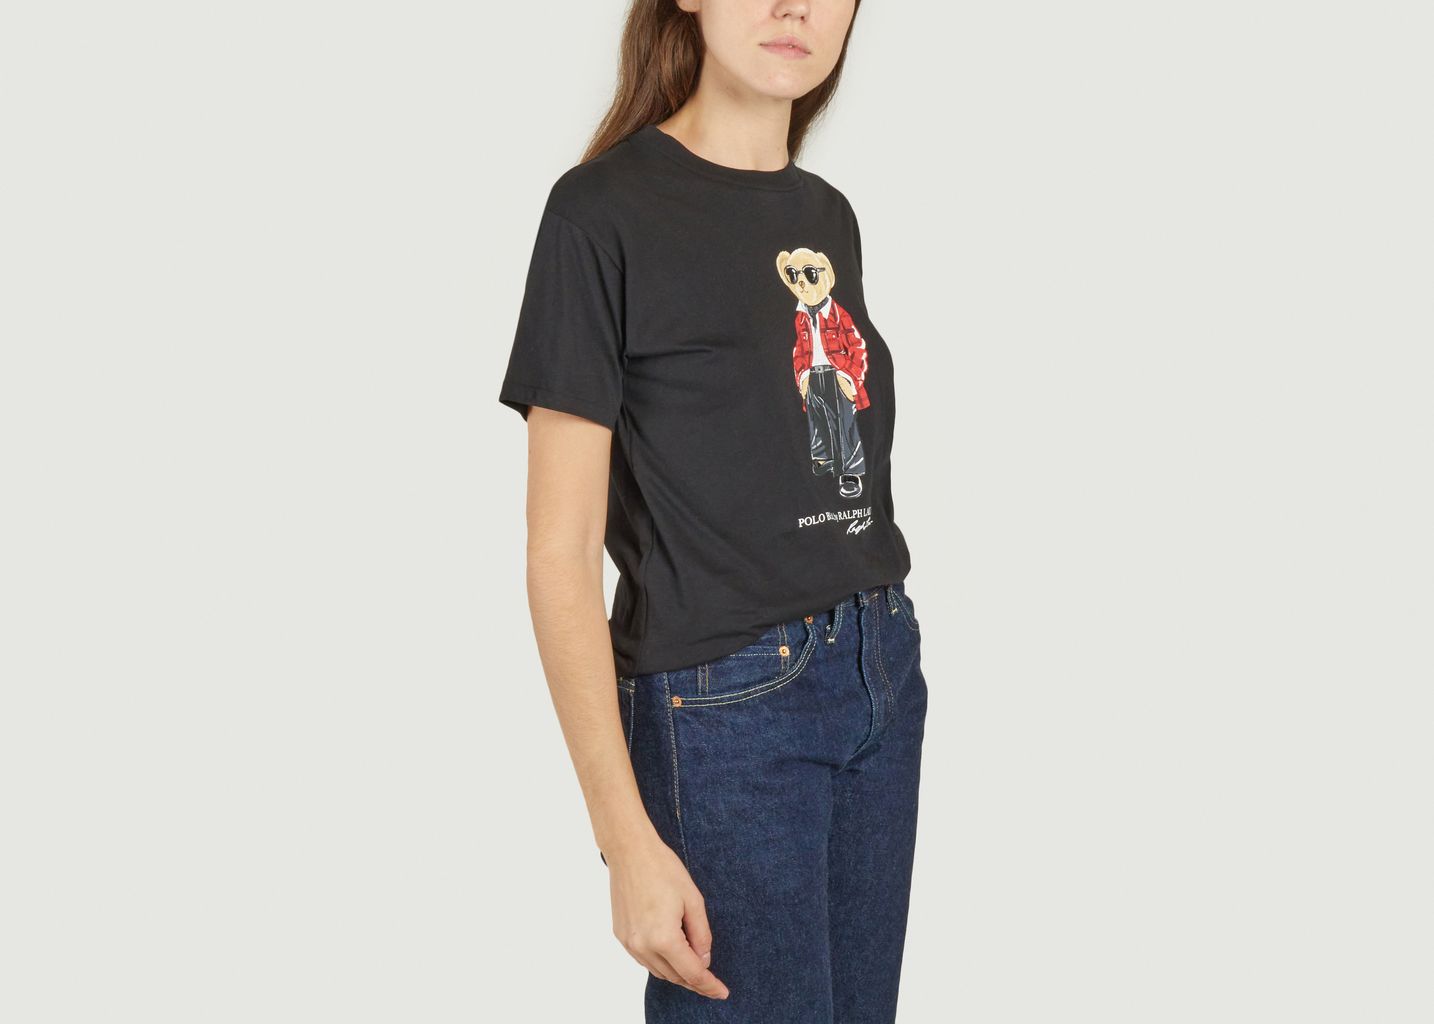 Polo T-shirt - Polo Ralph Lauren